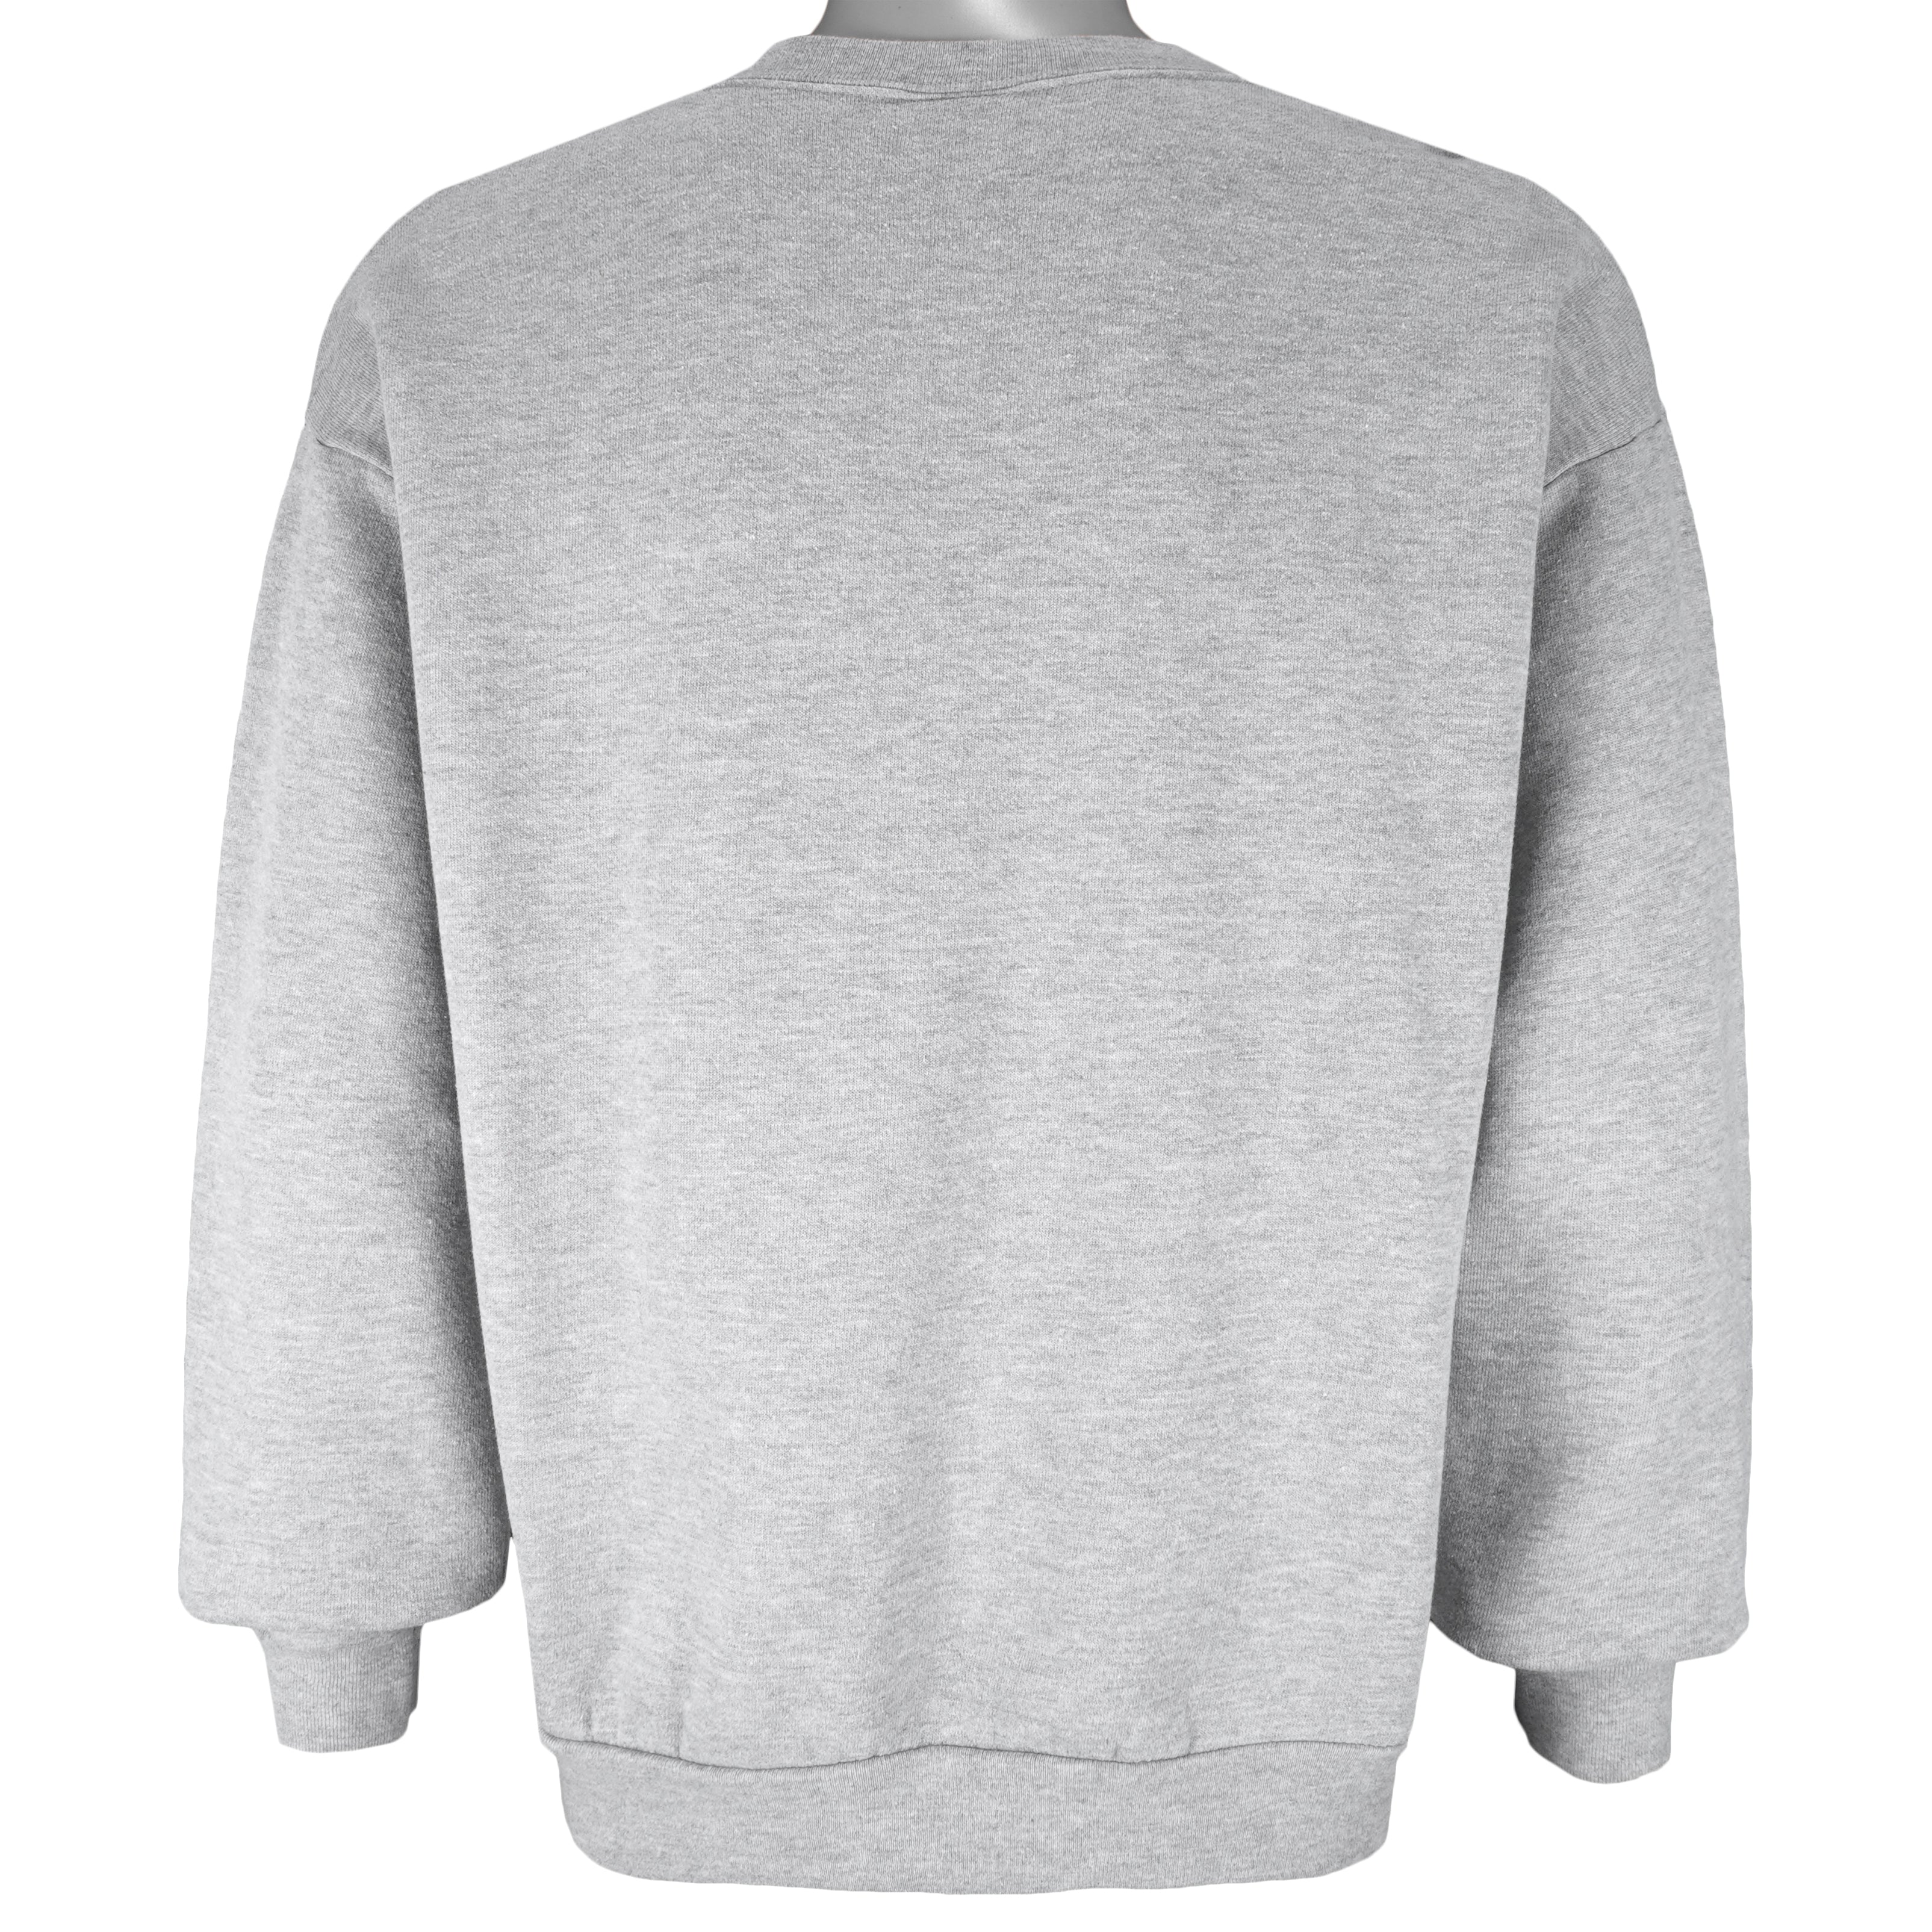 CustomCat Philadelphia Eagles NFL Crewneck Sweatshirt Sweater Ash / XL